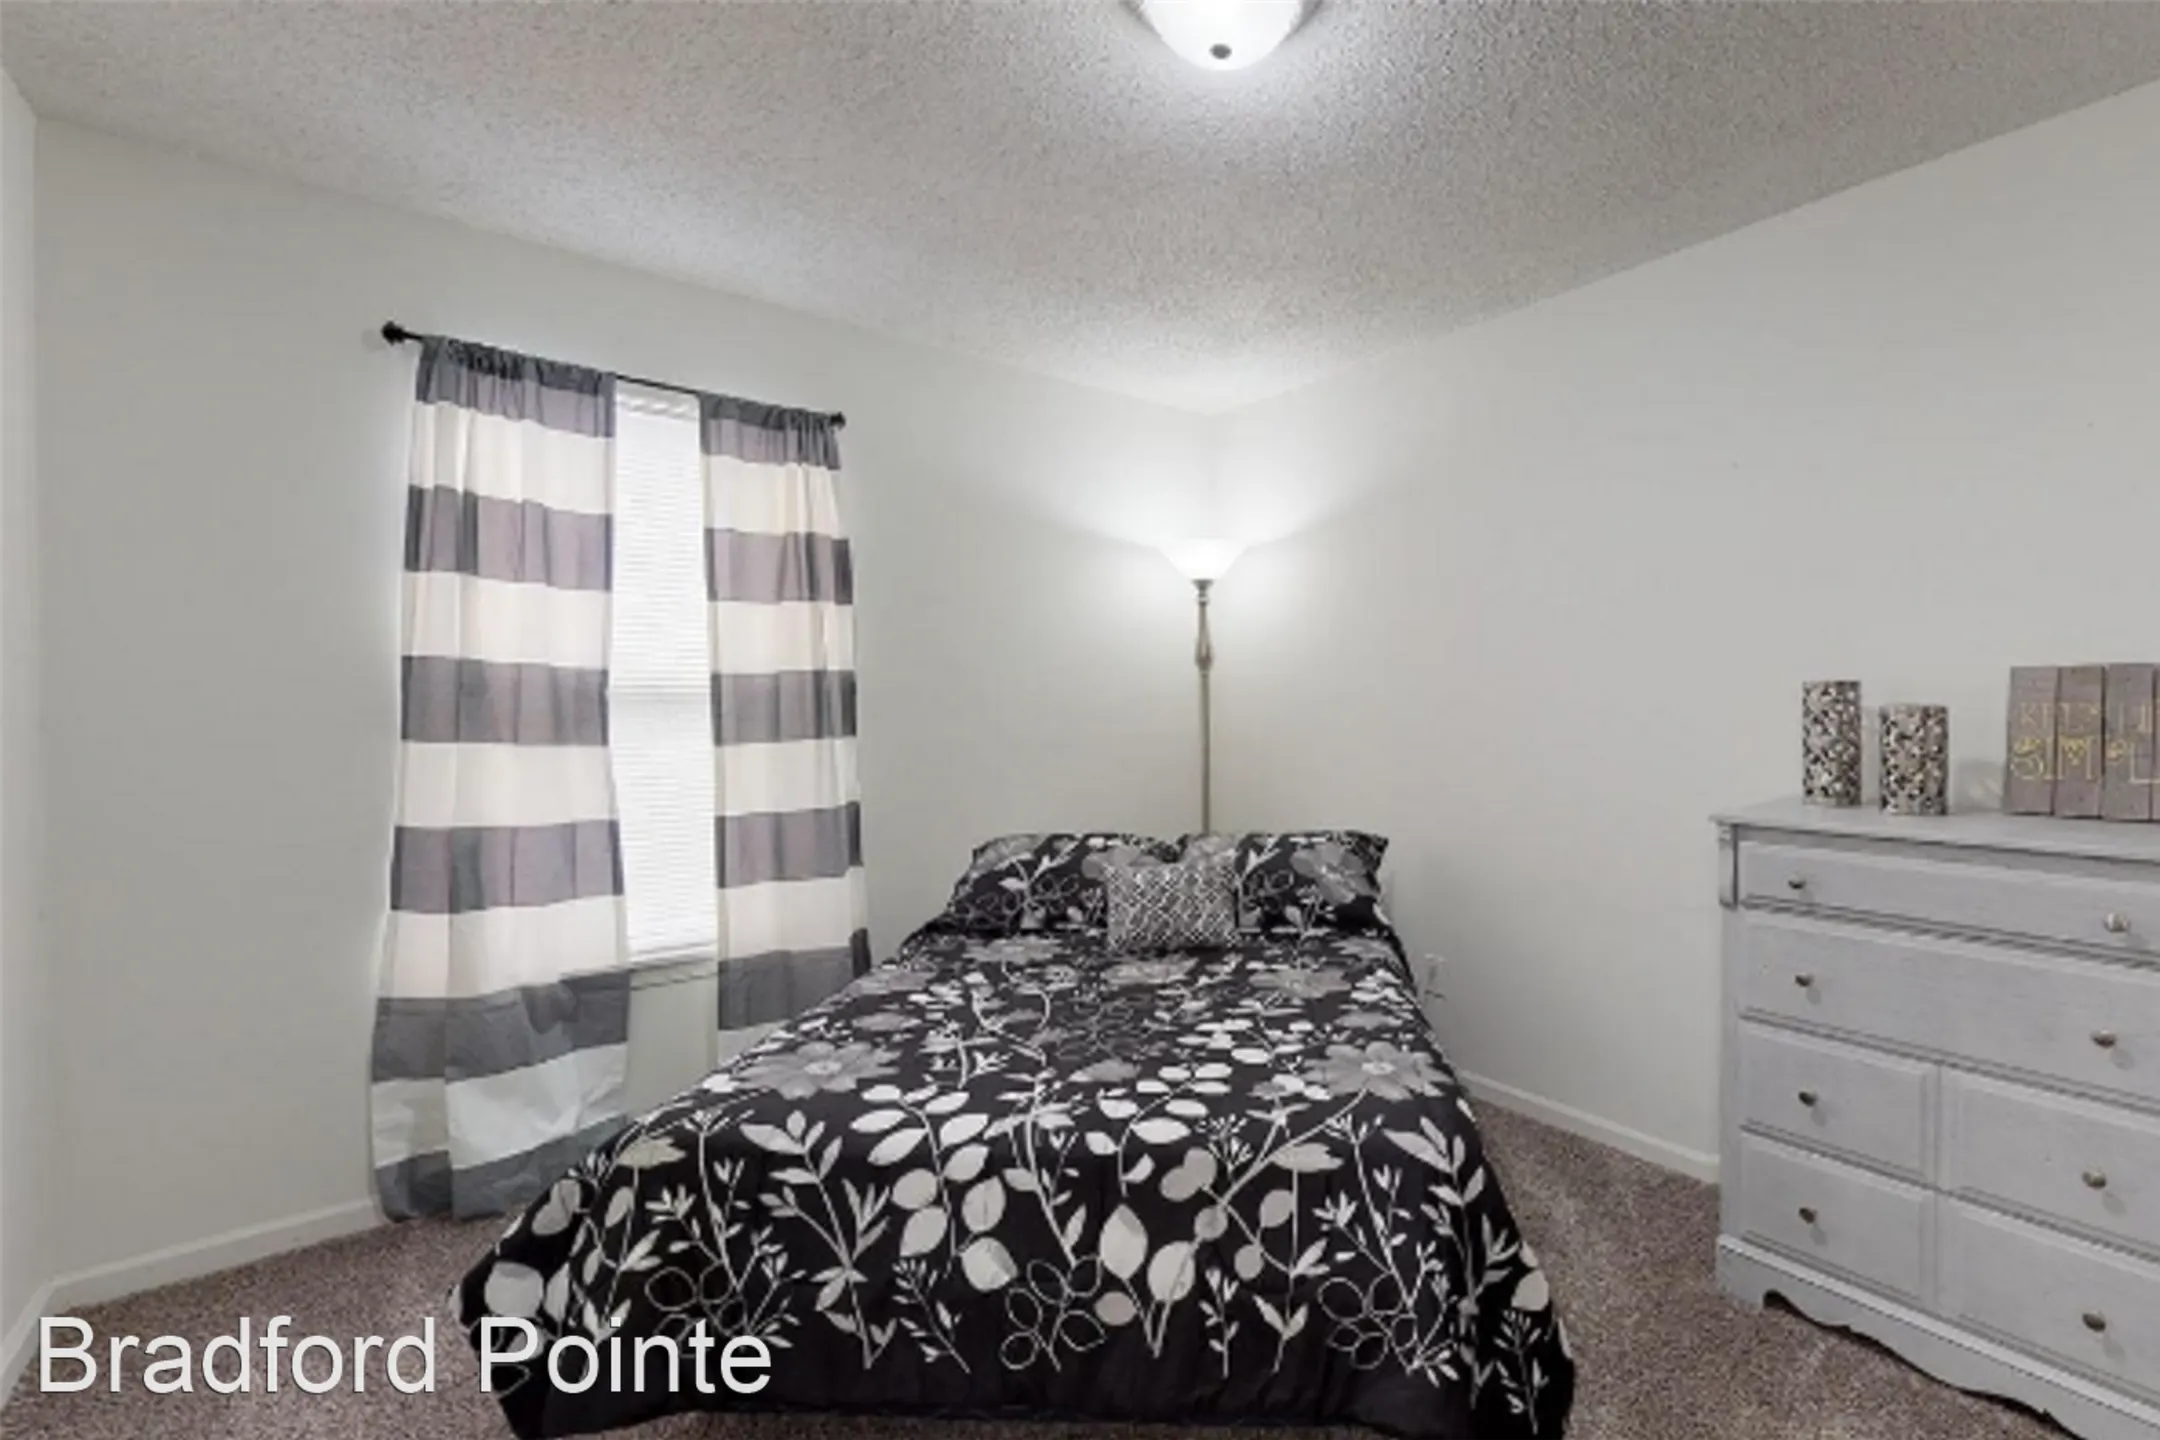 Bedroom - Bradford Pointe Apartments - Evansville, IN